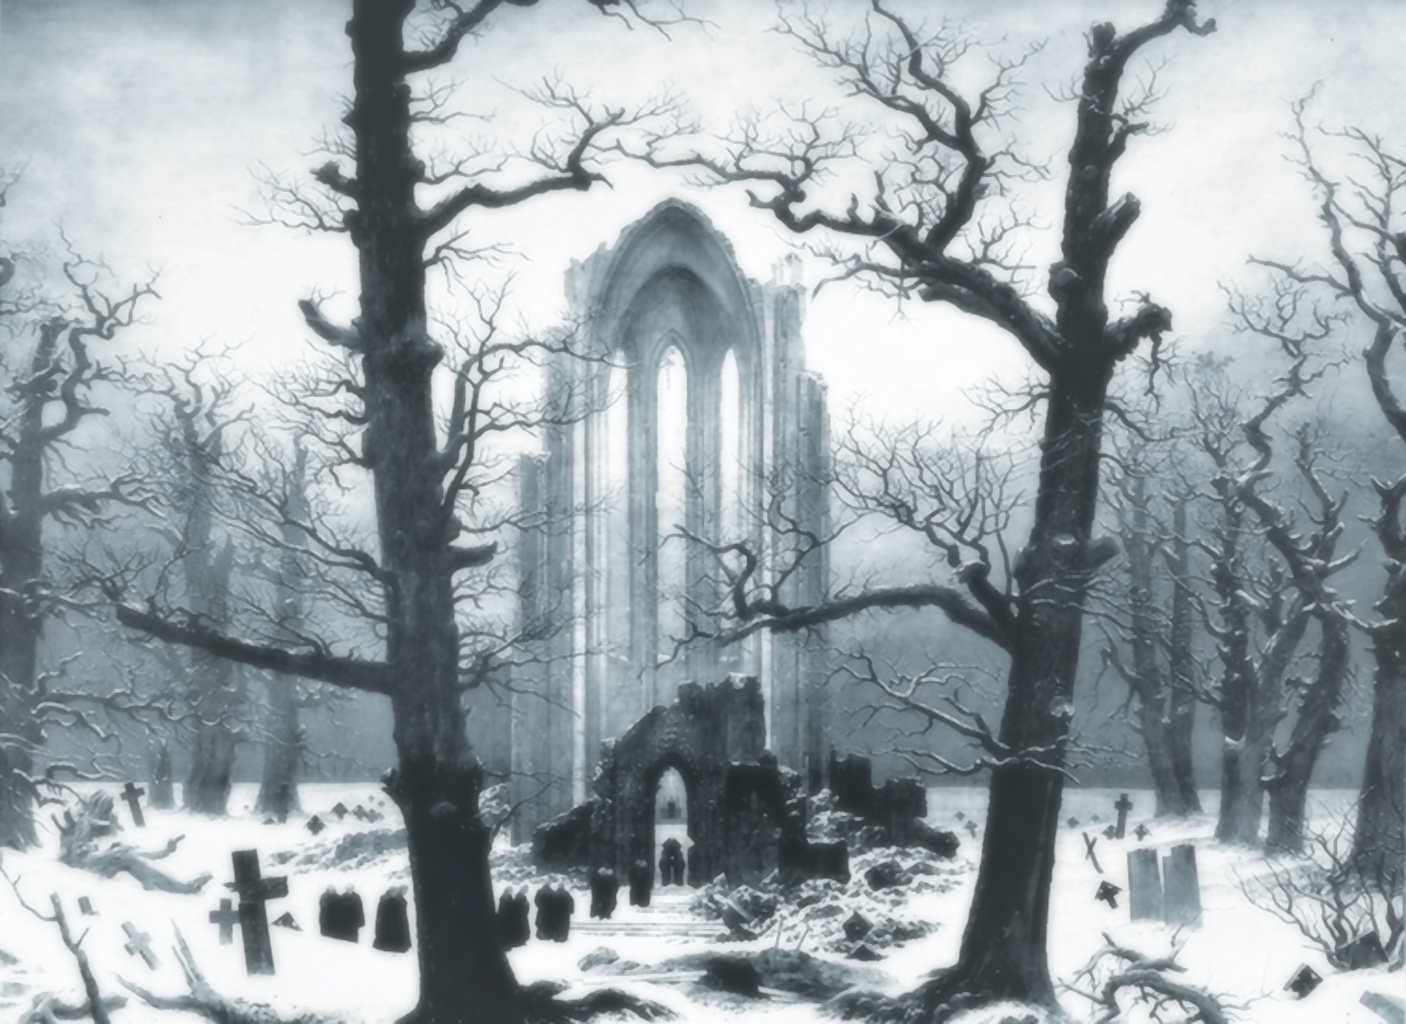 "Monastery Graveyard under Snow" by Caspar David Friedrich, 1819. by Caspar David Friedrich